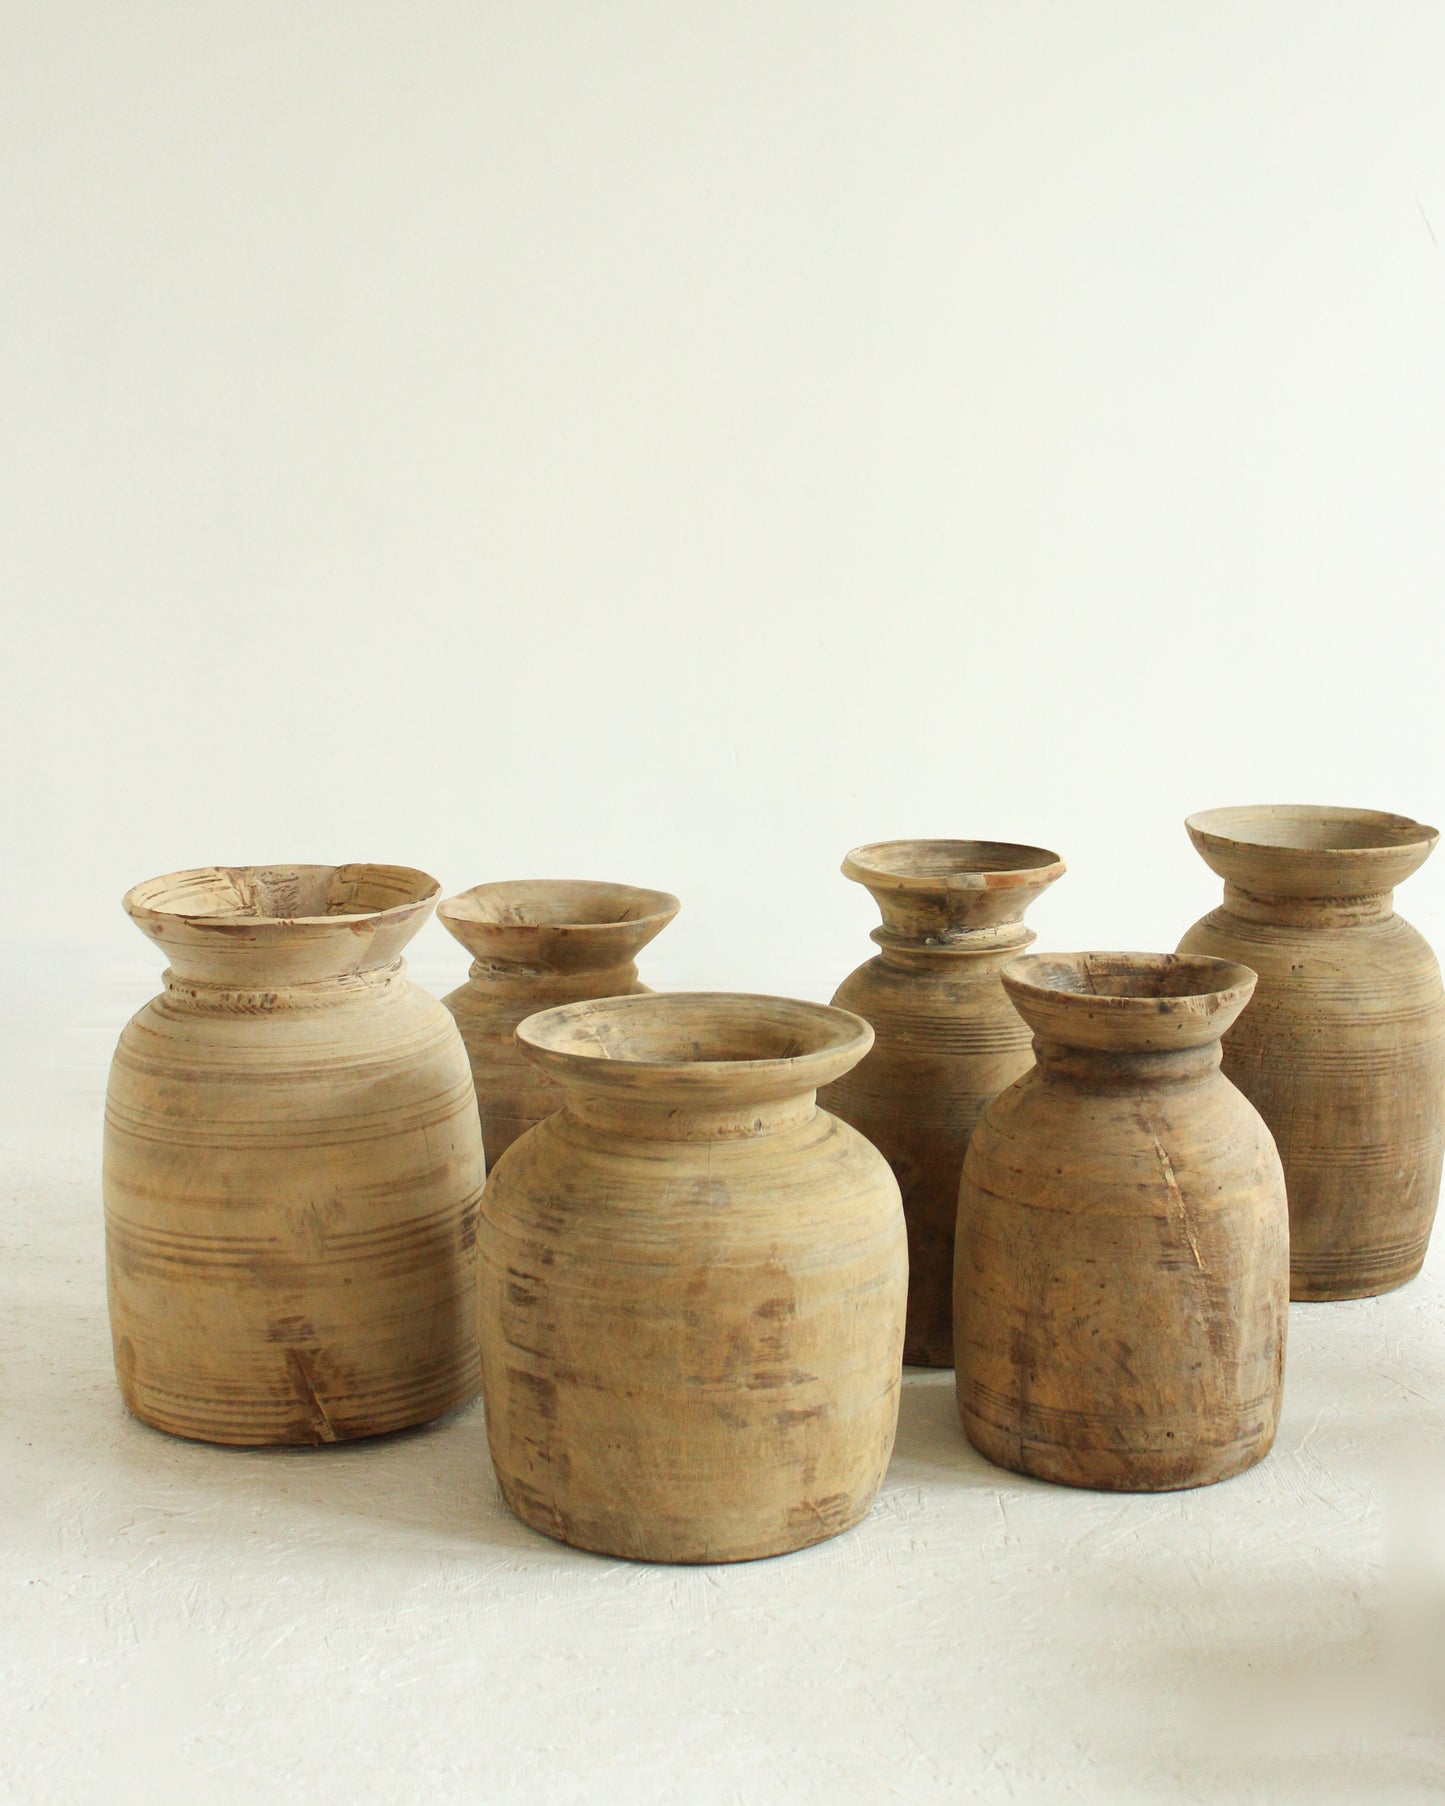 Bleached Antique Rustic Wooden Vase // Large